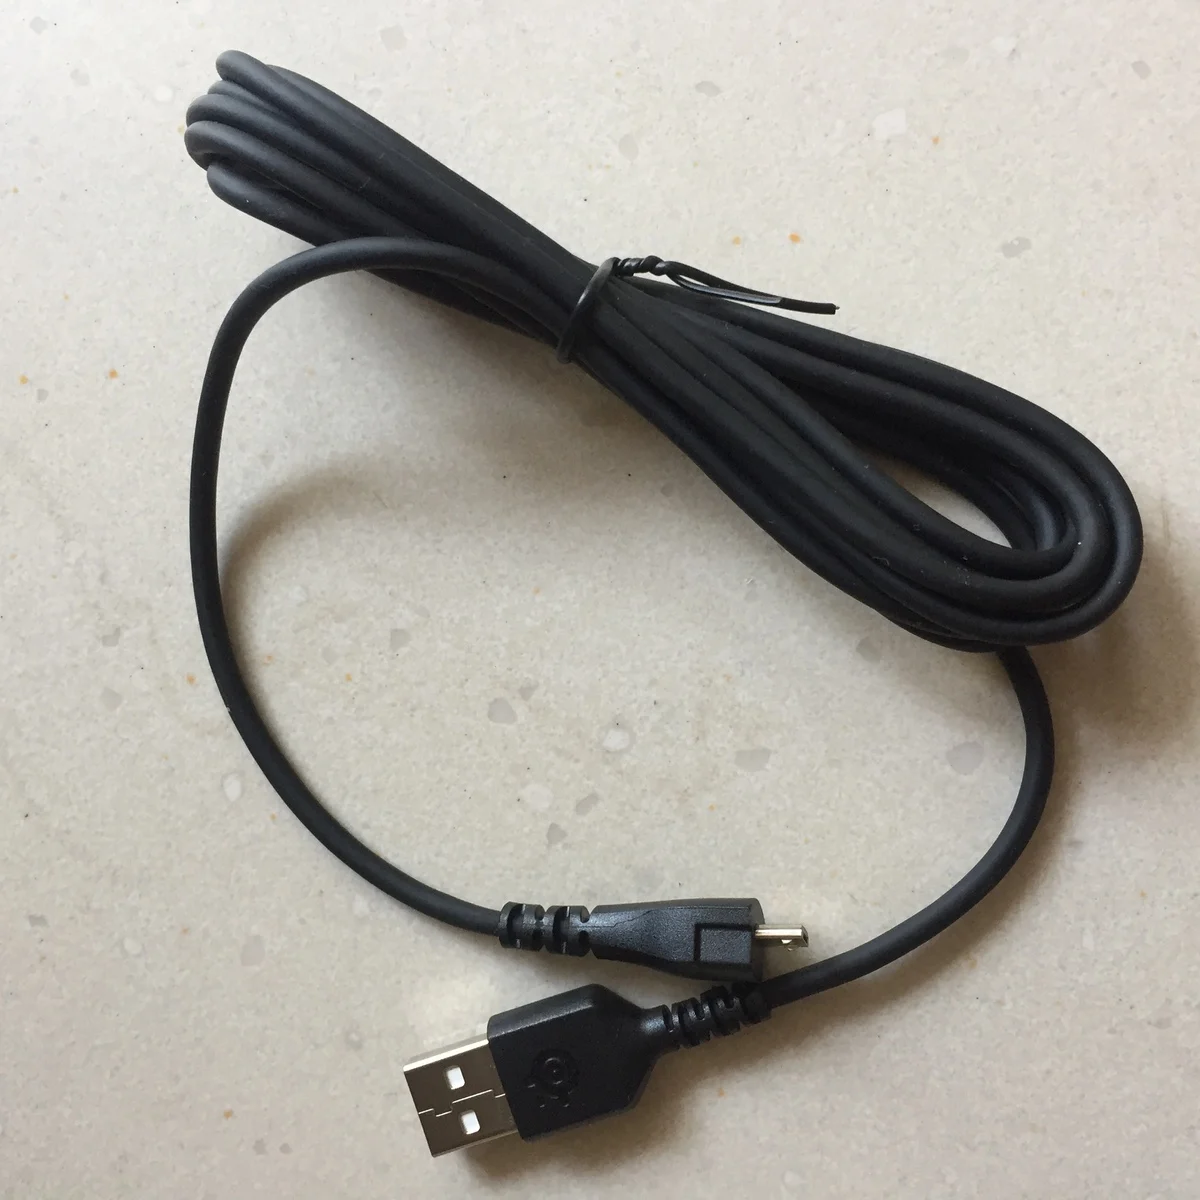 1 шт. кабель для мыши боковой корпус для мыши Steelseries Rival 600 оригинальные аксессуары для мыши - Цвет: mouse cable